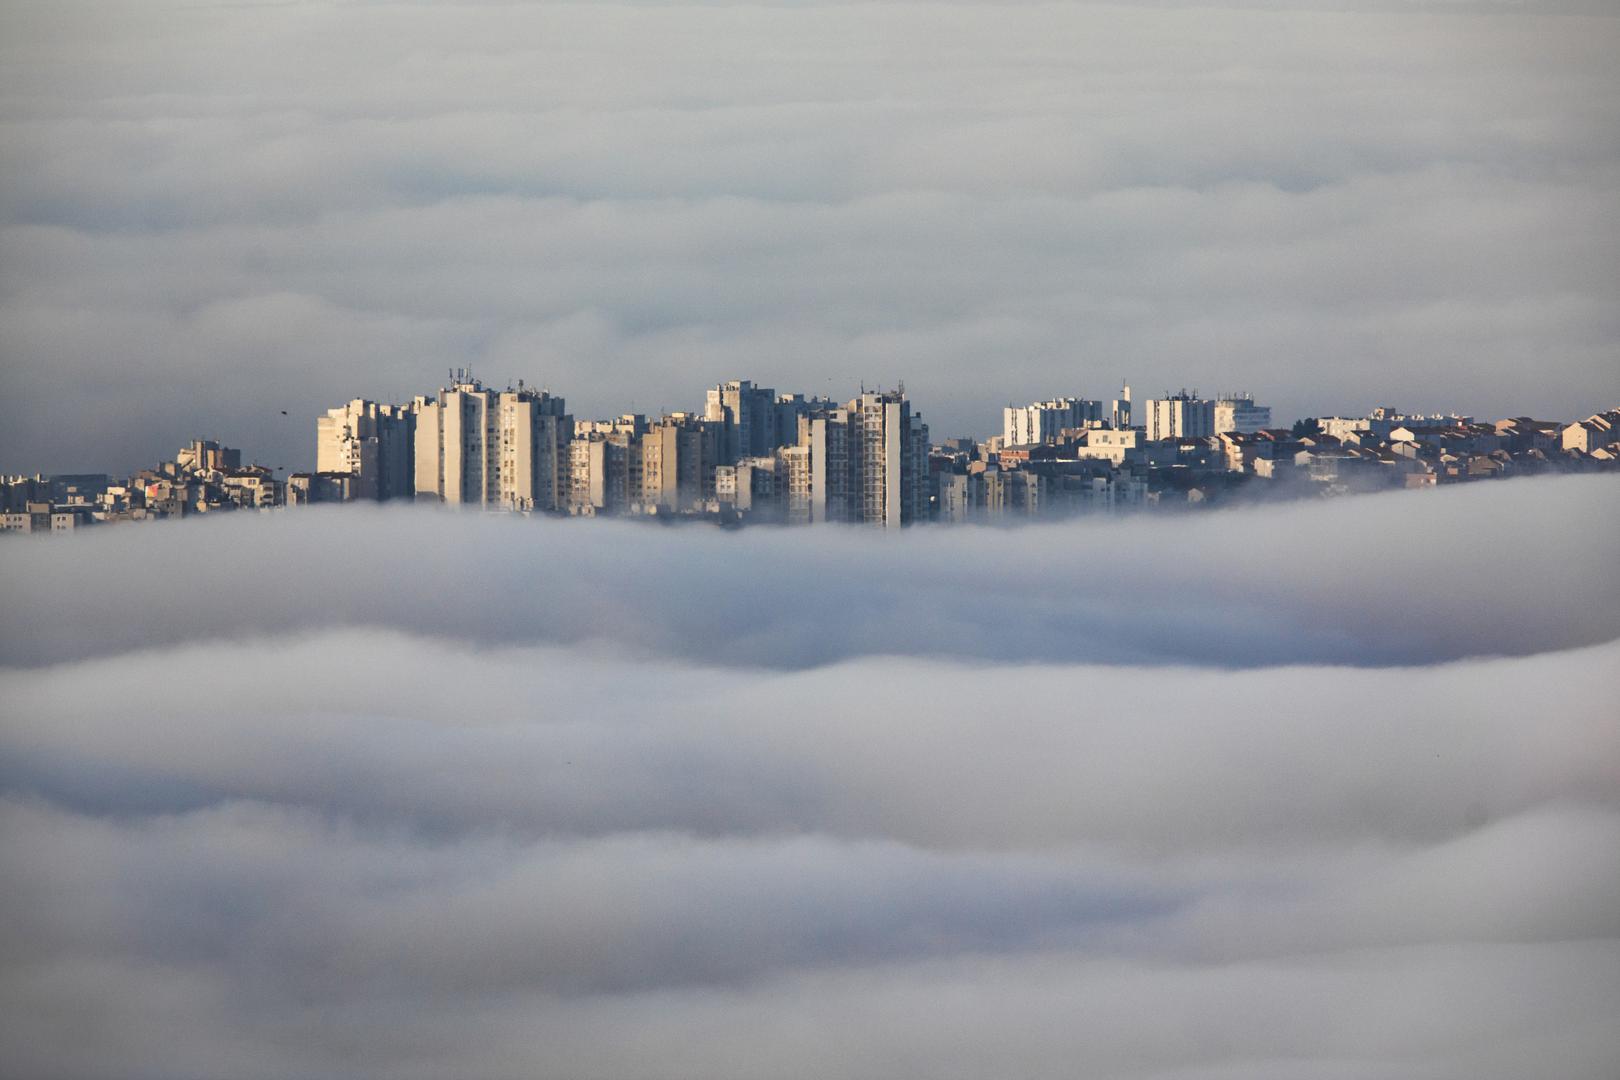 Gusta magla koja se nadvila nad grad drugi dan za redom stvorila je neprepoznatljive panorame Splita gdje su samo neke zgrade provirile iz oblaka.